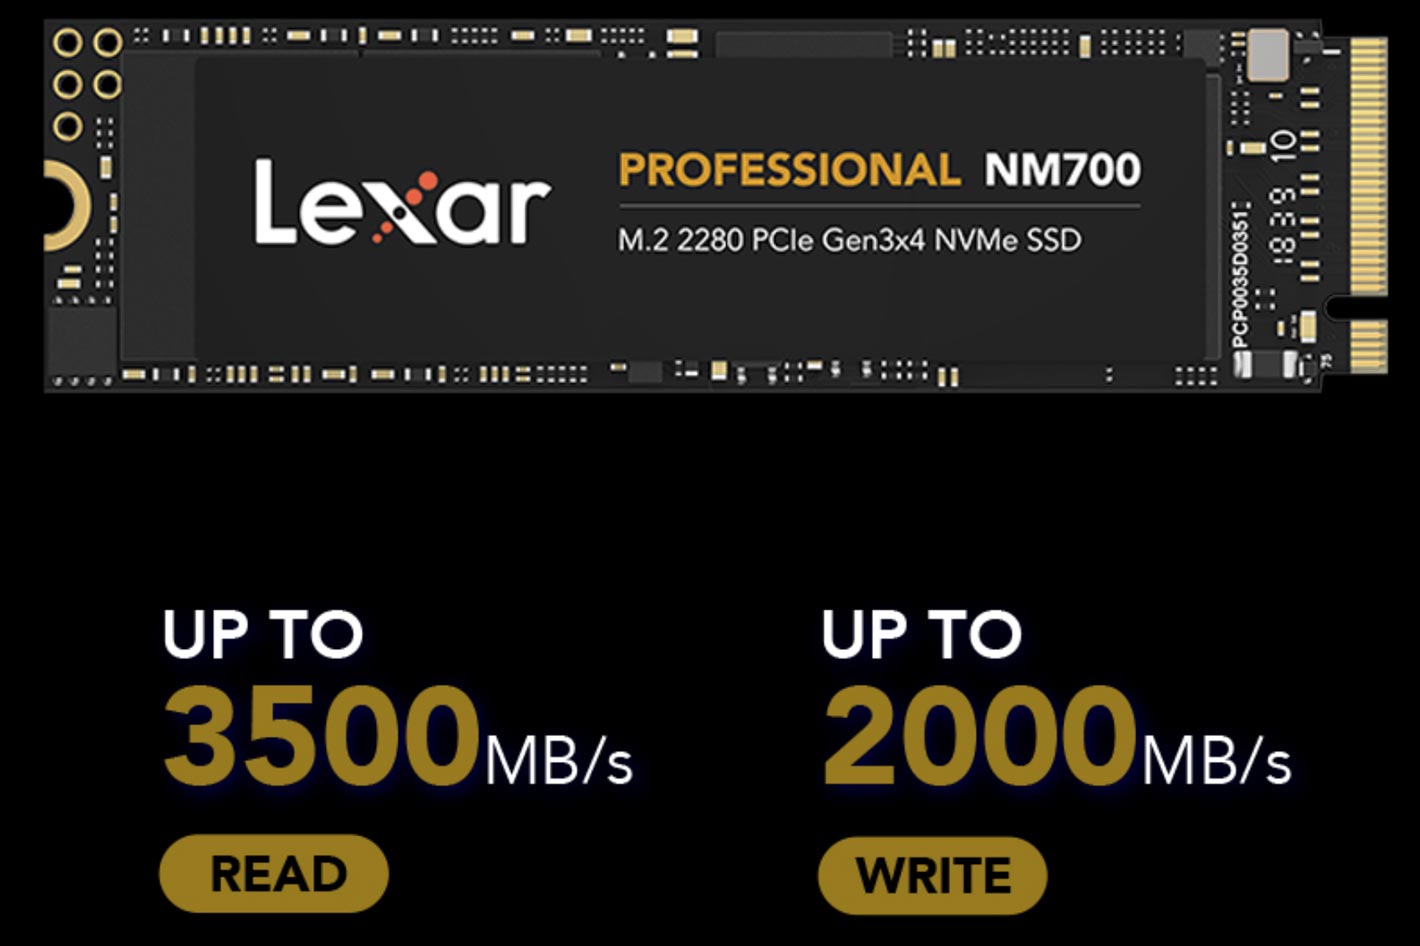 Lexar Professional NM700 M.2 2280: 6.5x faster than a SATA based SSD